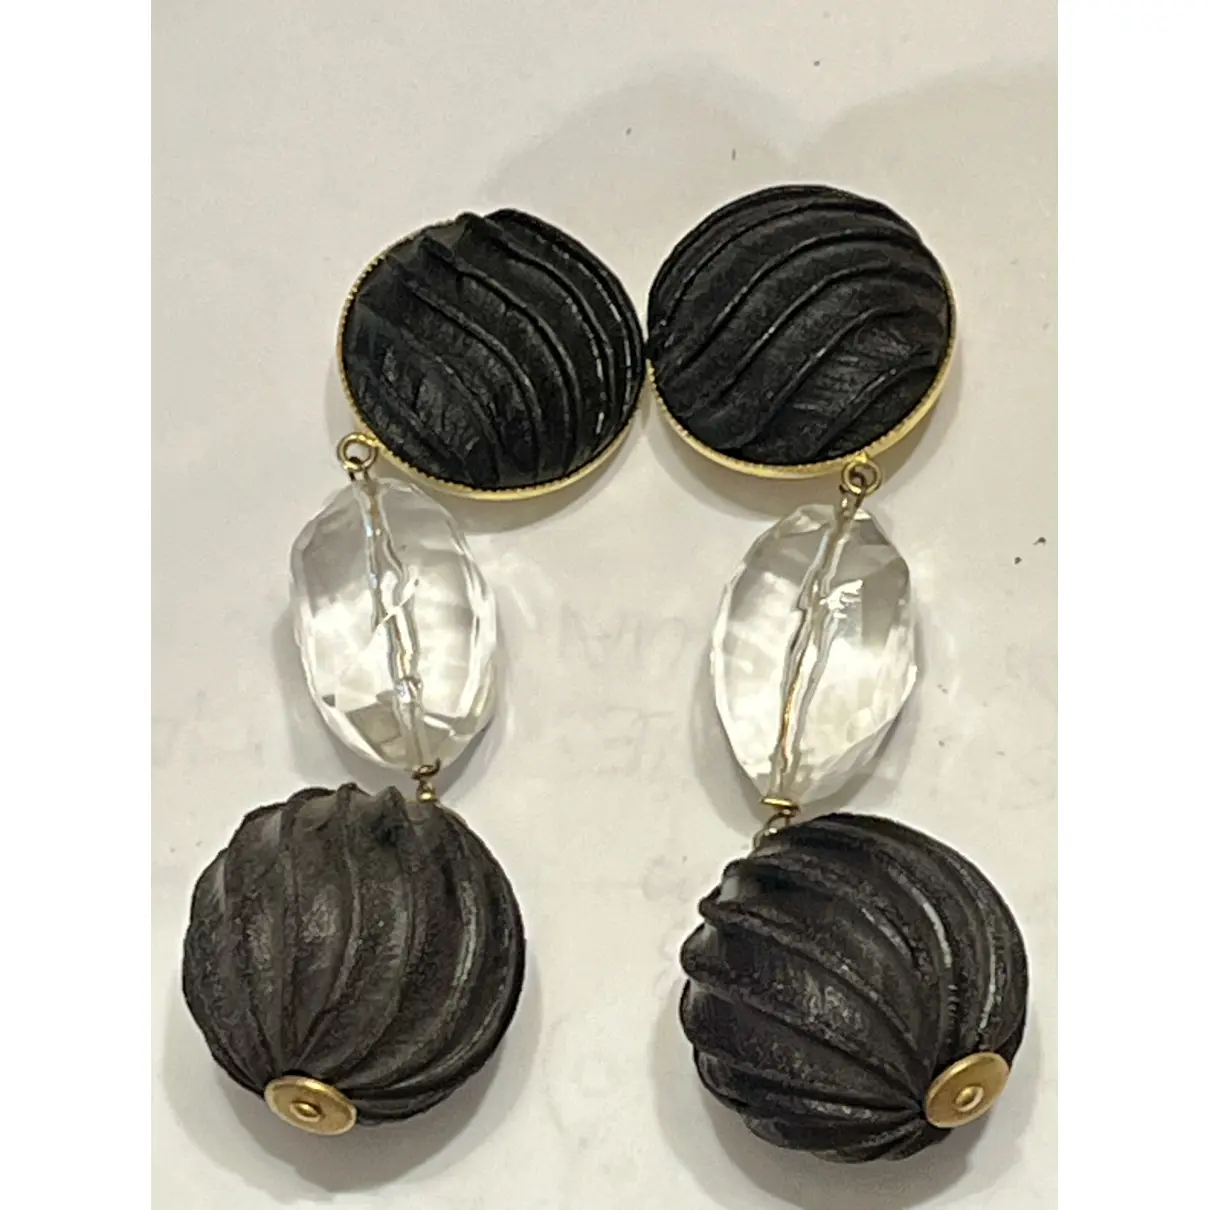 Earrings Sharra Pagano